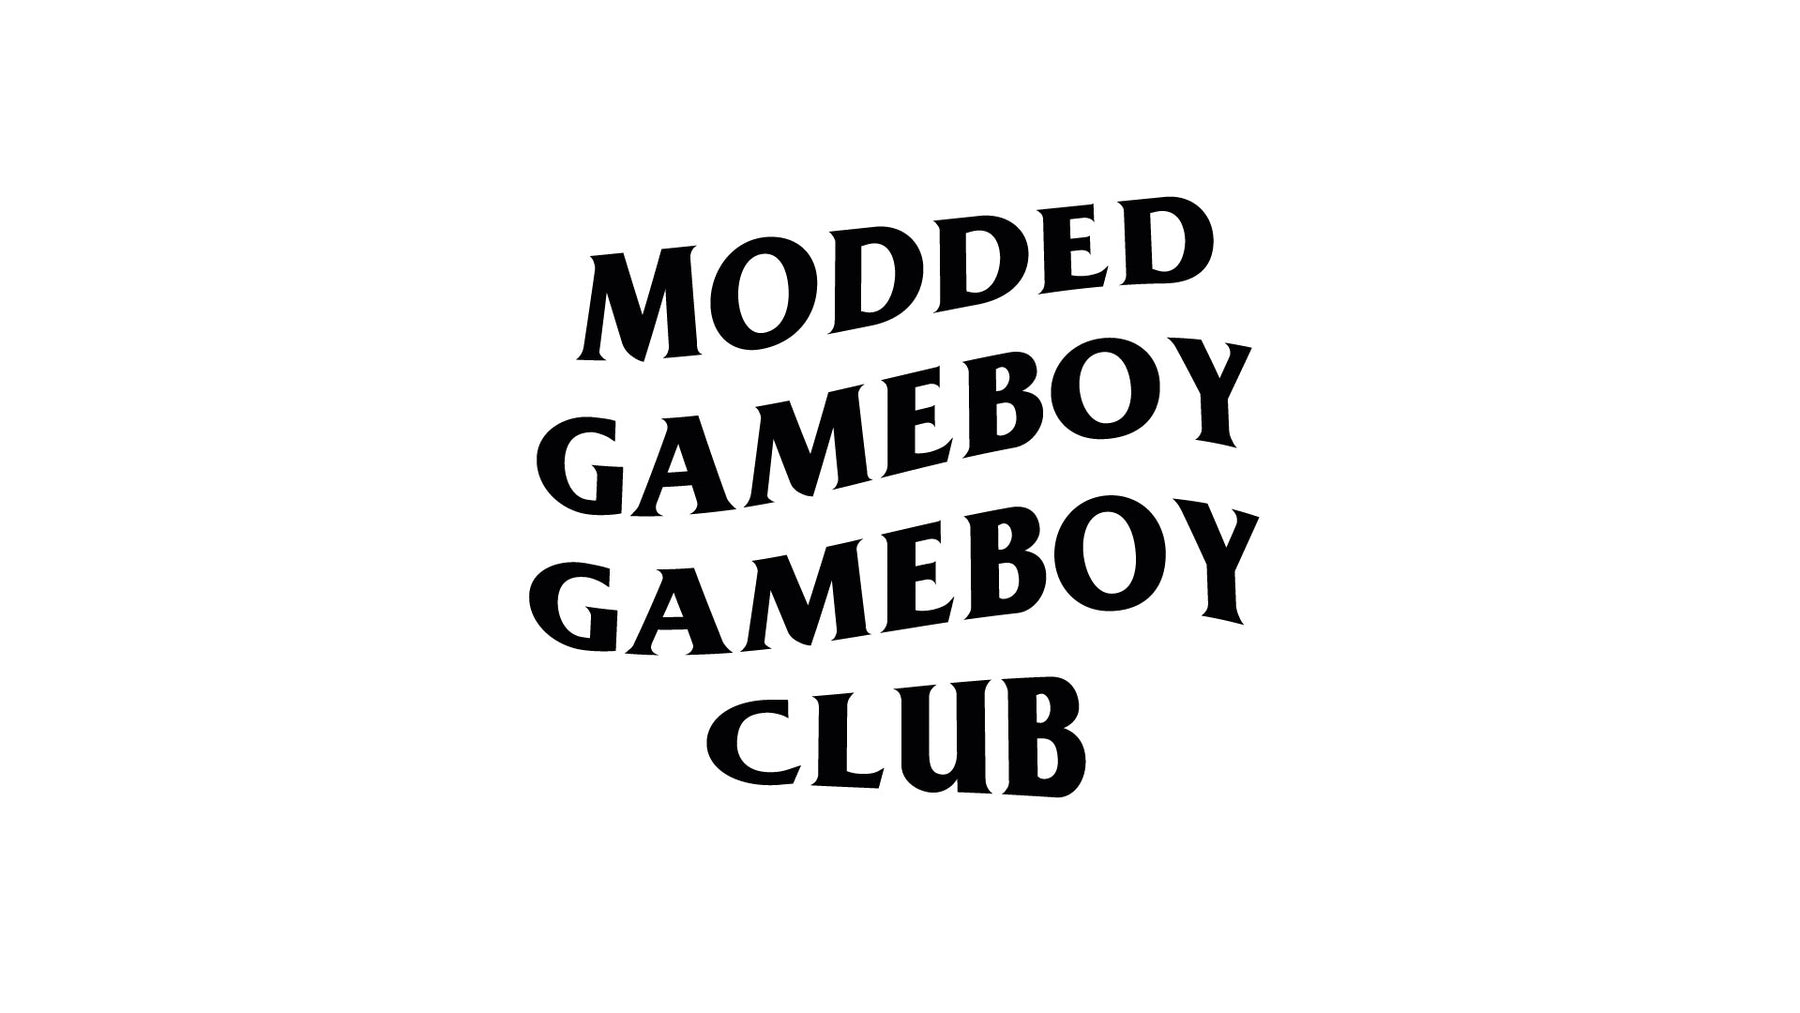 We sponsor the Modded Gameboy Gameboy Club!